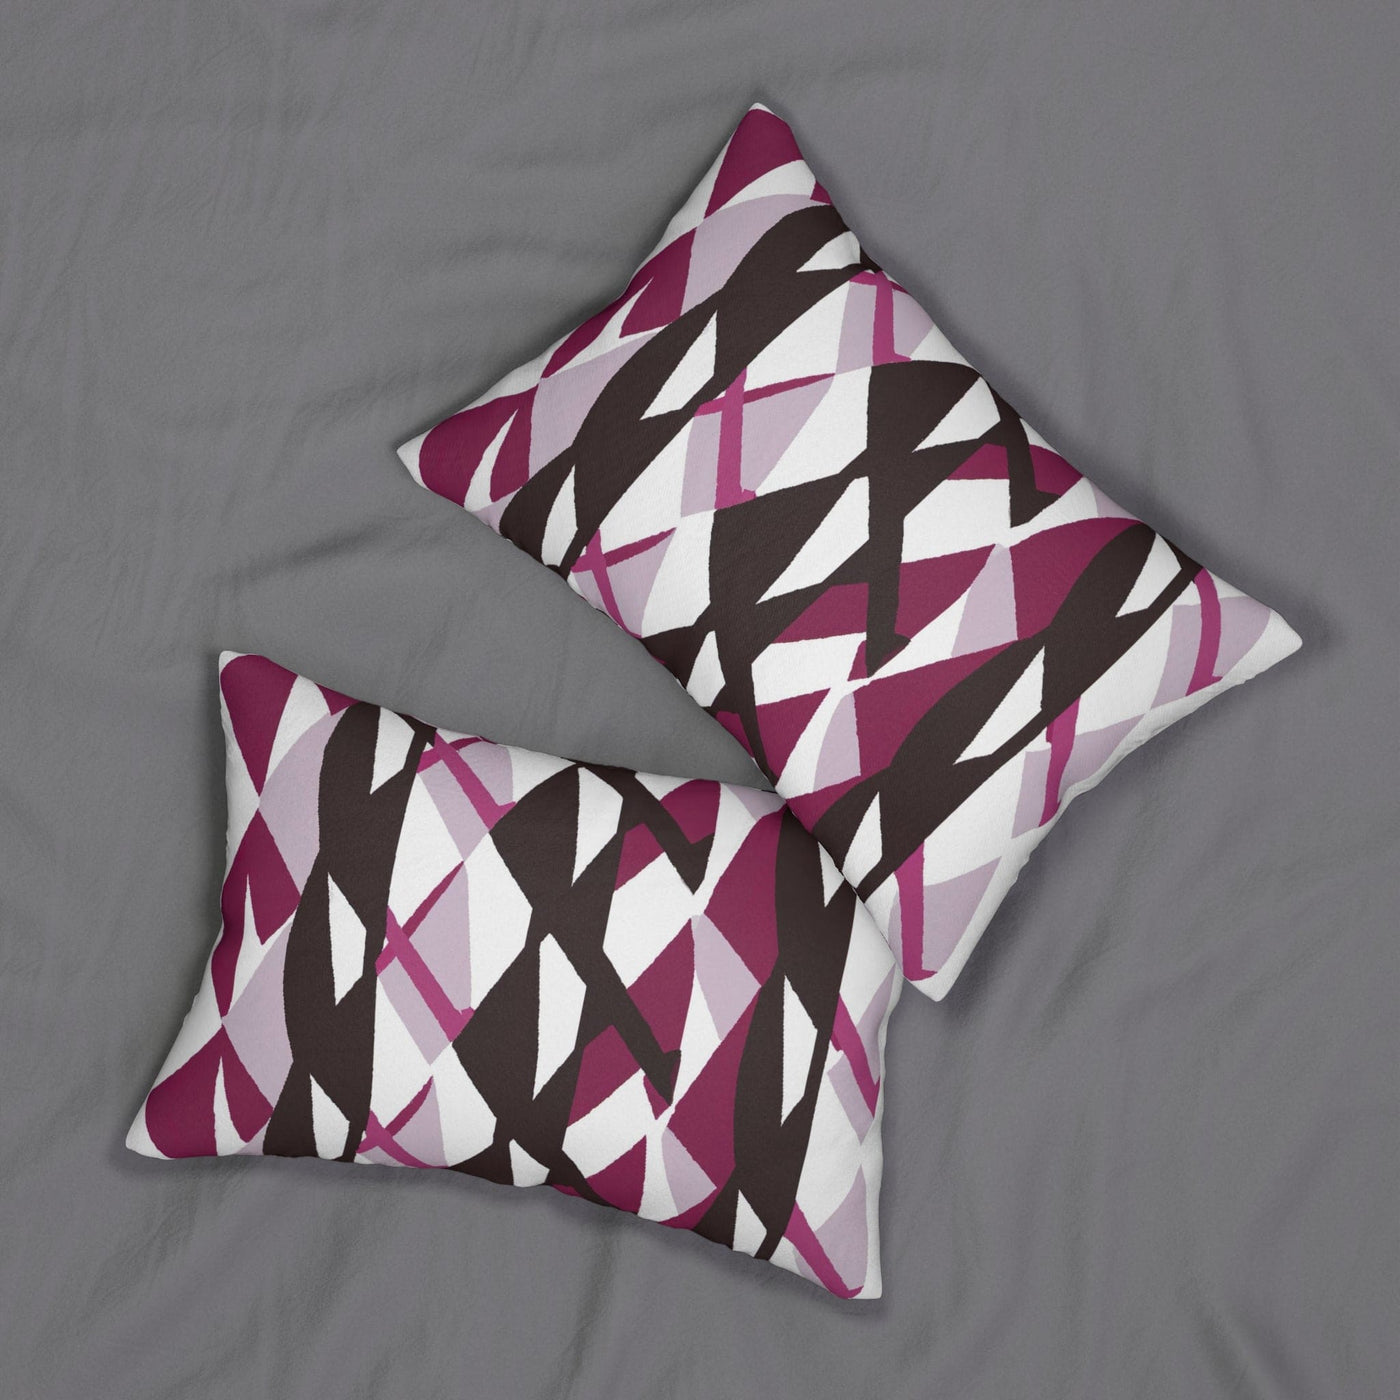 Decorative Lumbar Throw Pillow - Mauve Pink And Maroon Geometric Pattern